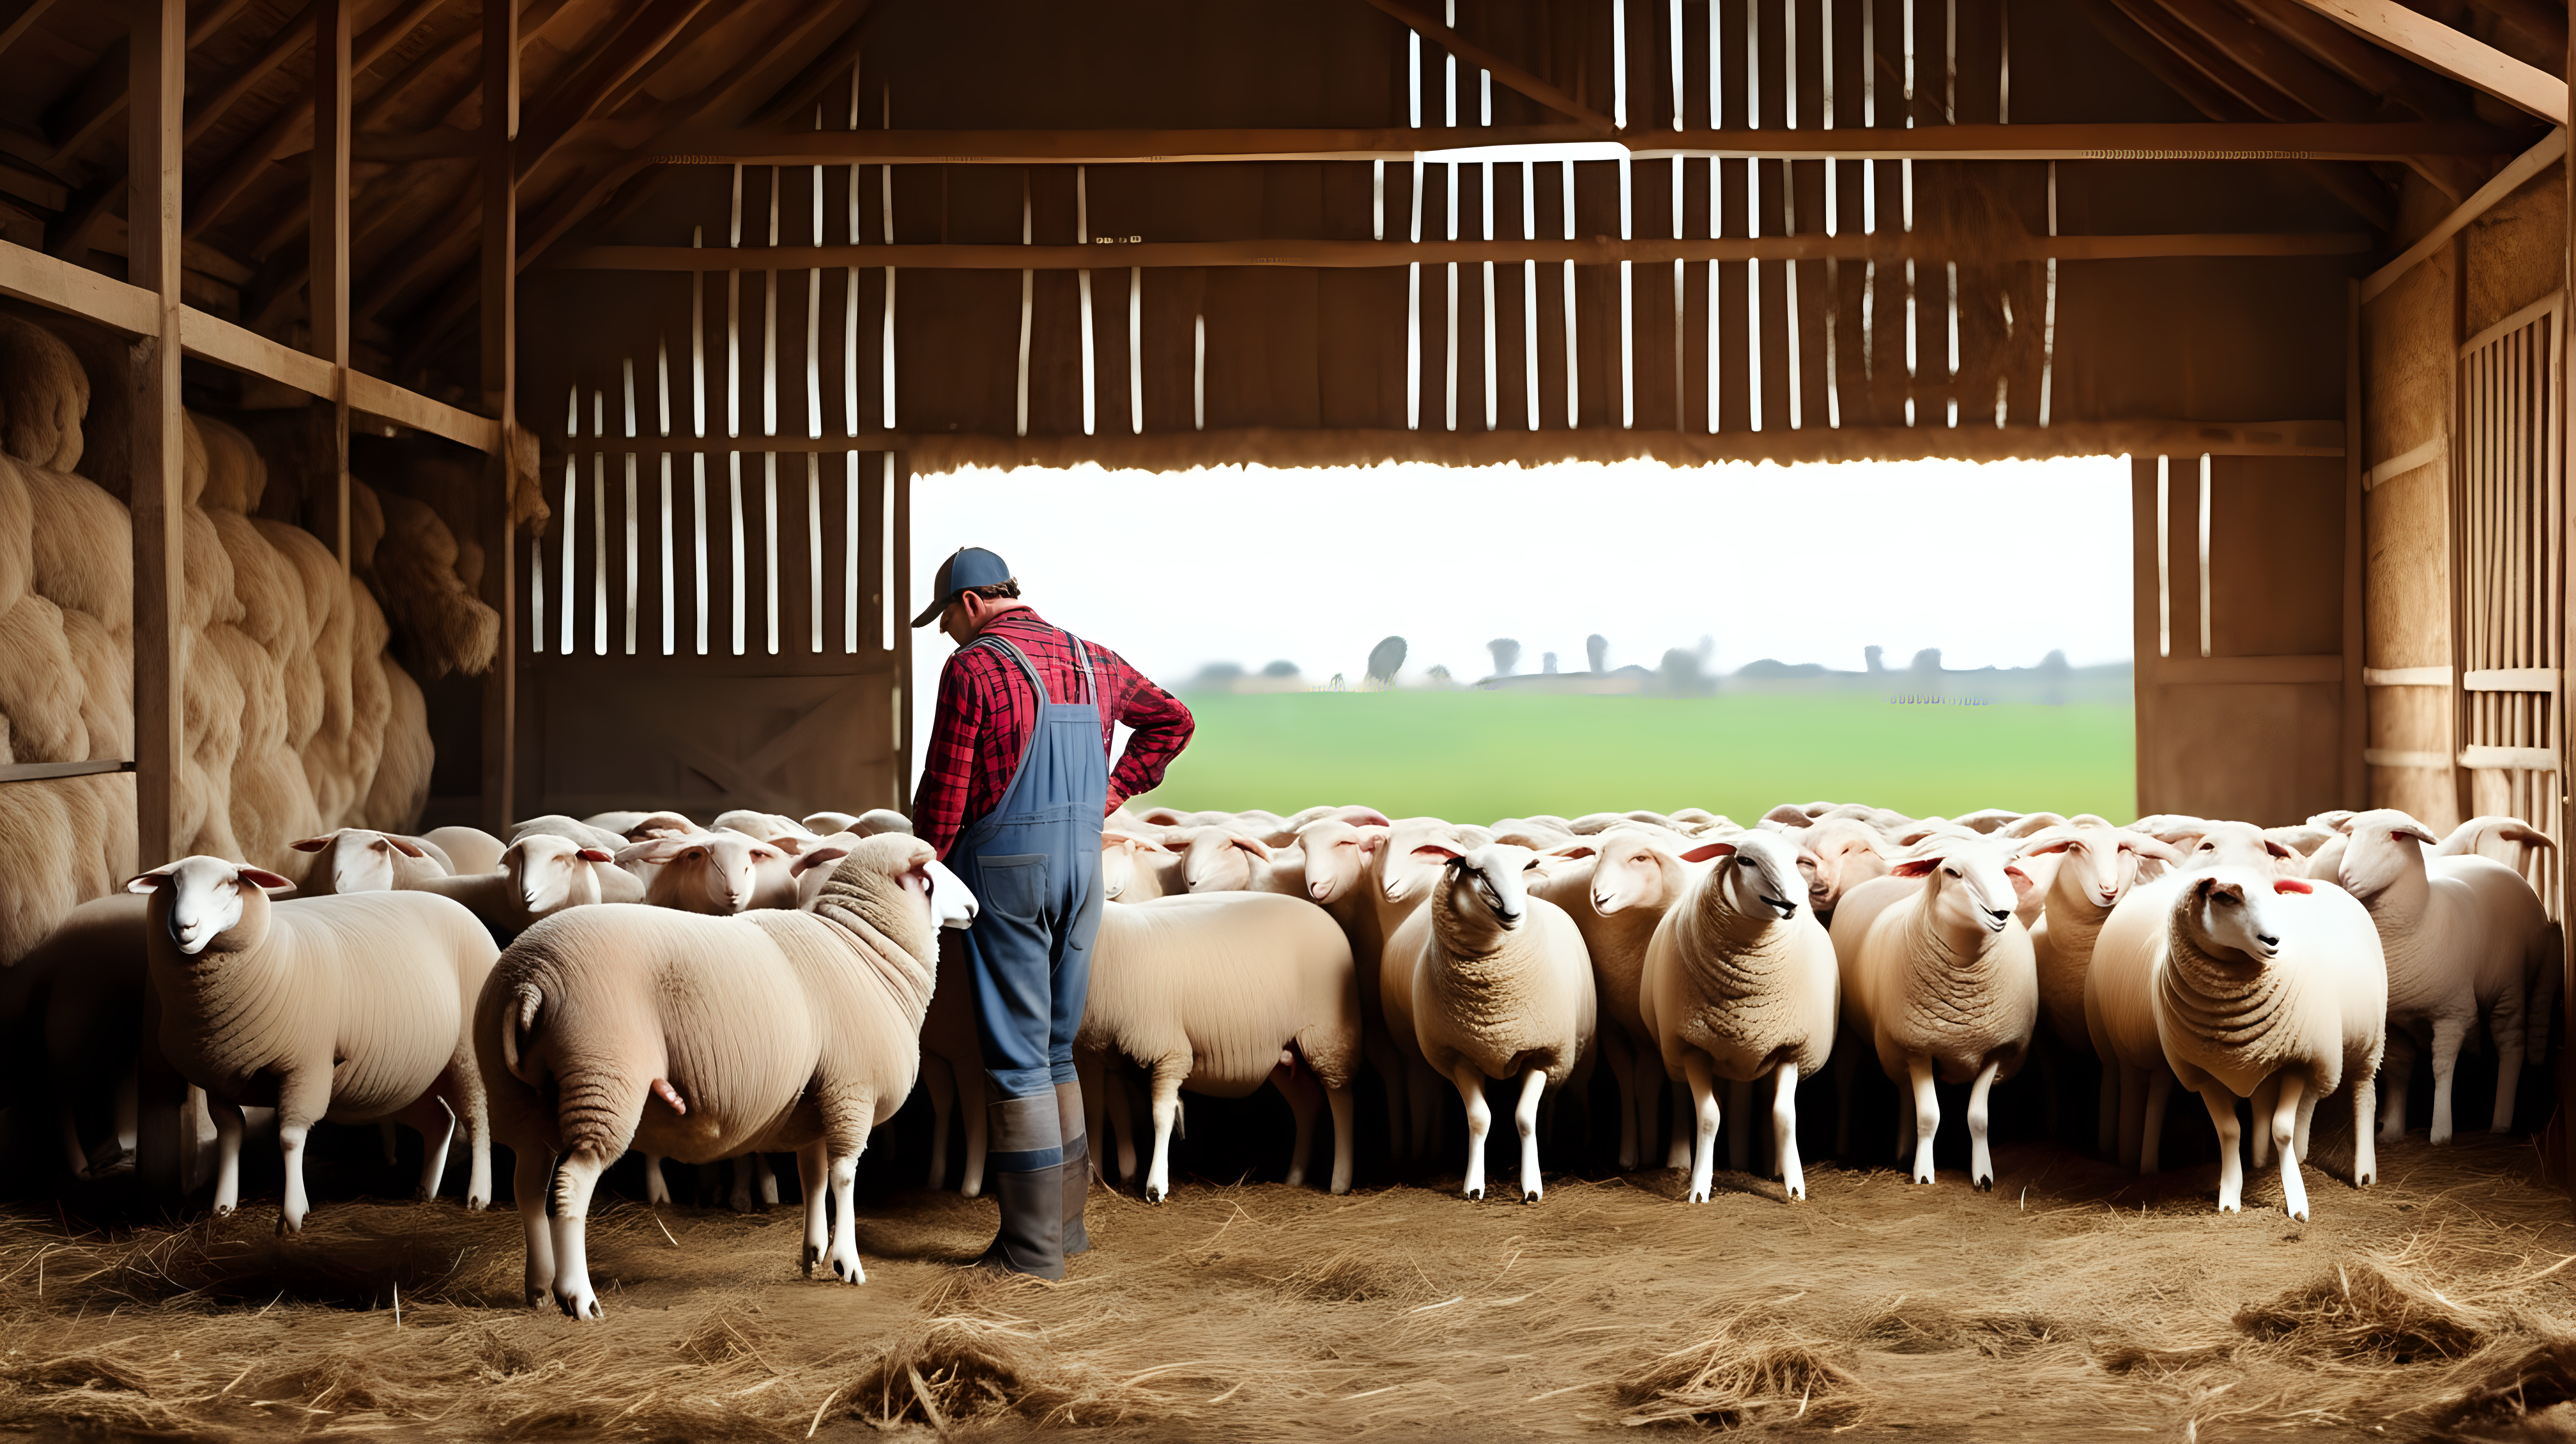 sheep with farmer in farm barn isolated on